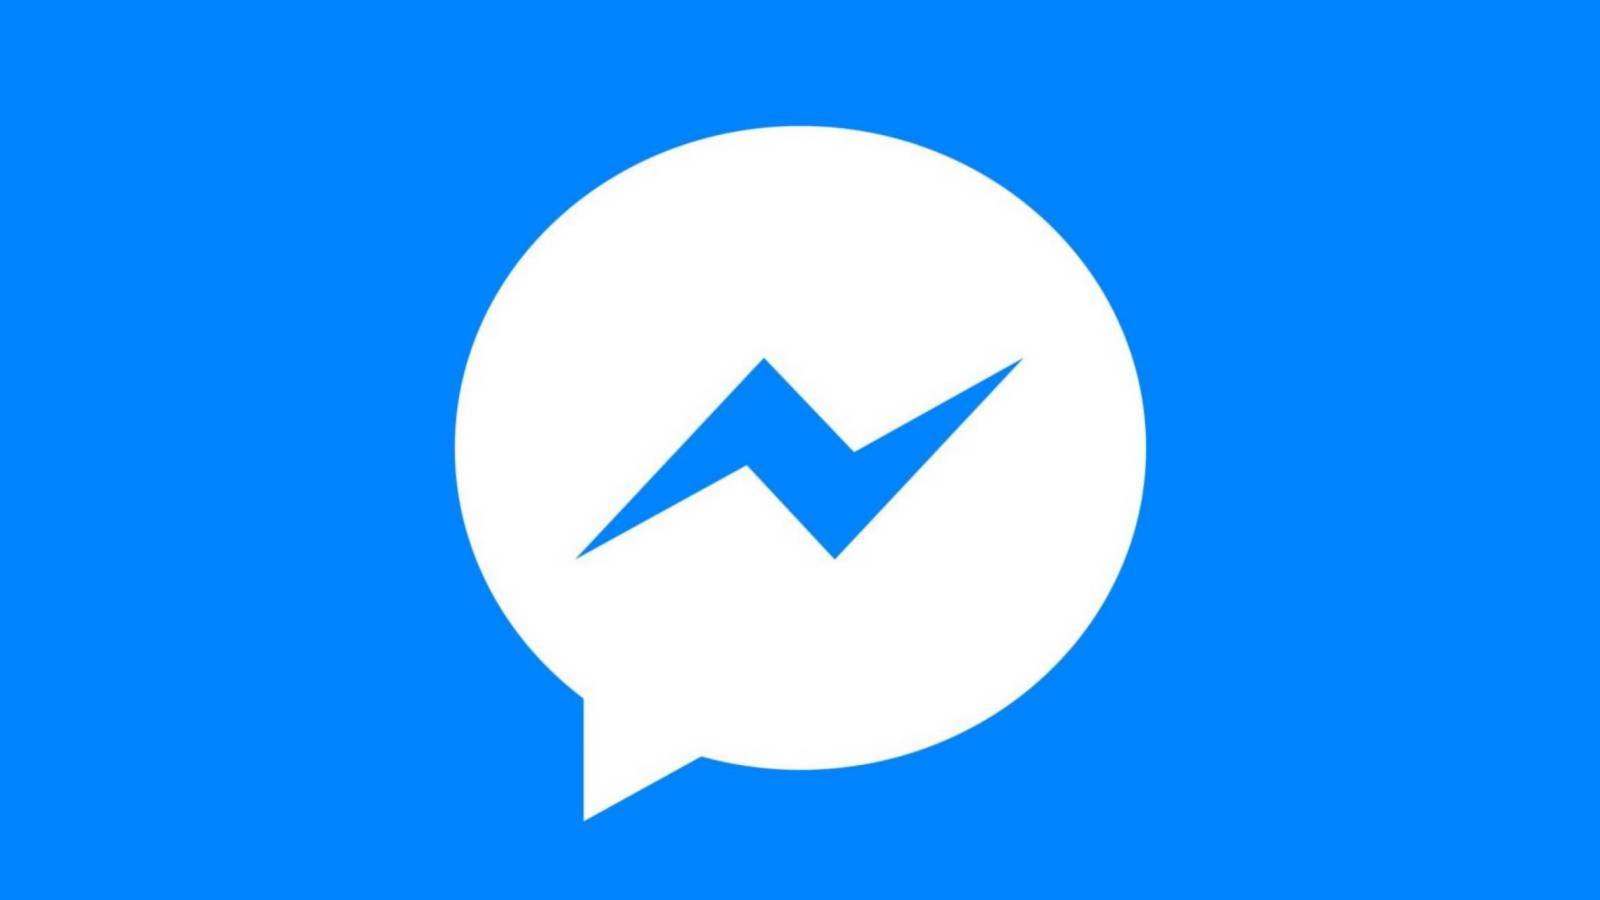 Facebook Messenger Update Nou cu Schimbari pentru Telefoane, Tablete